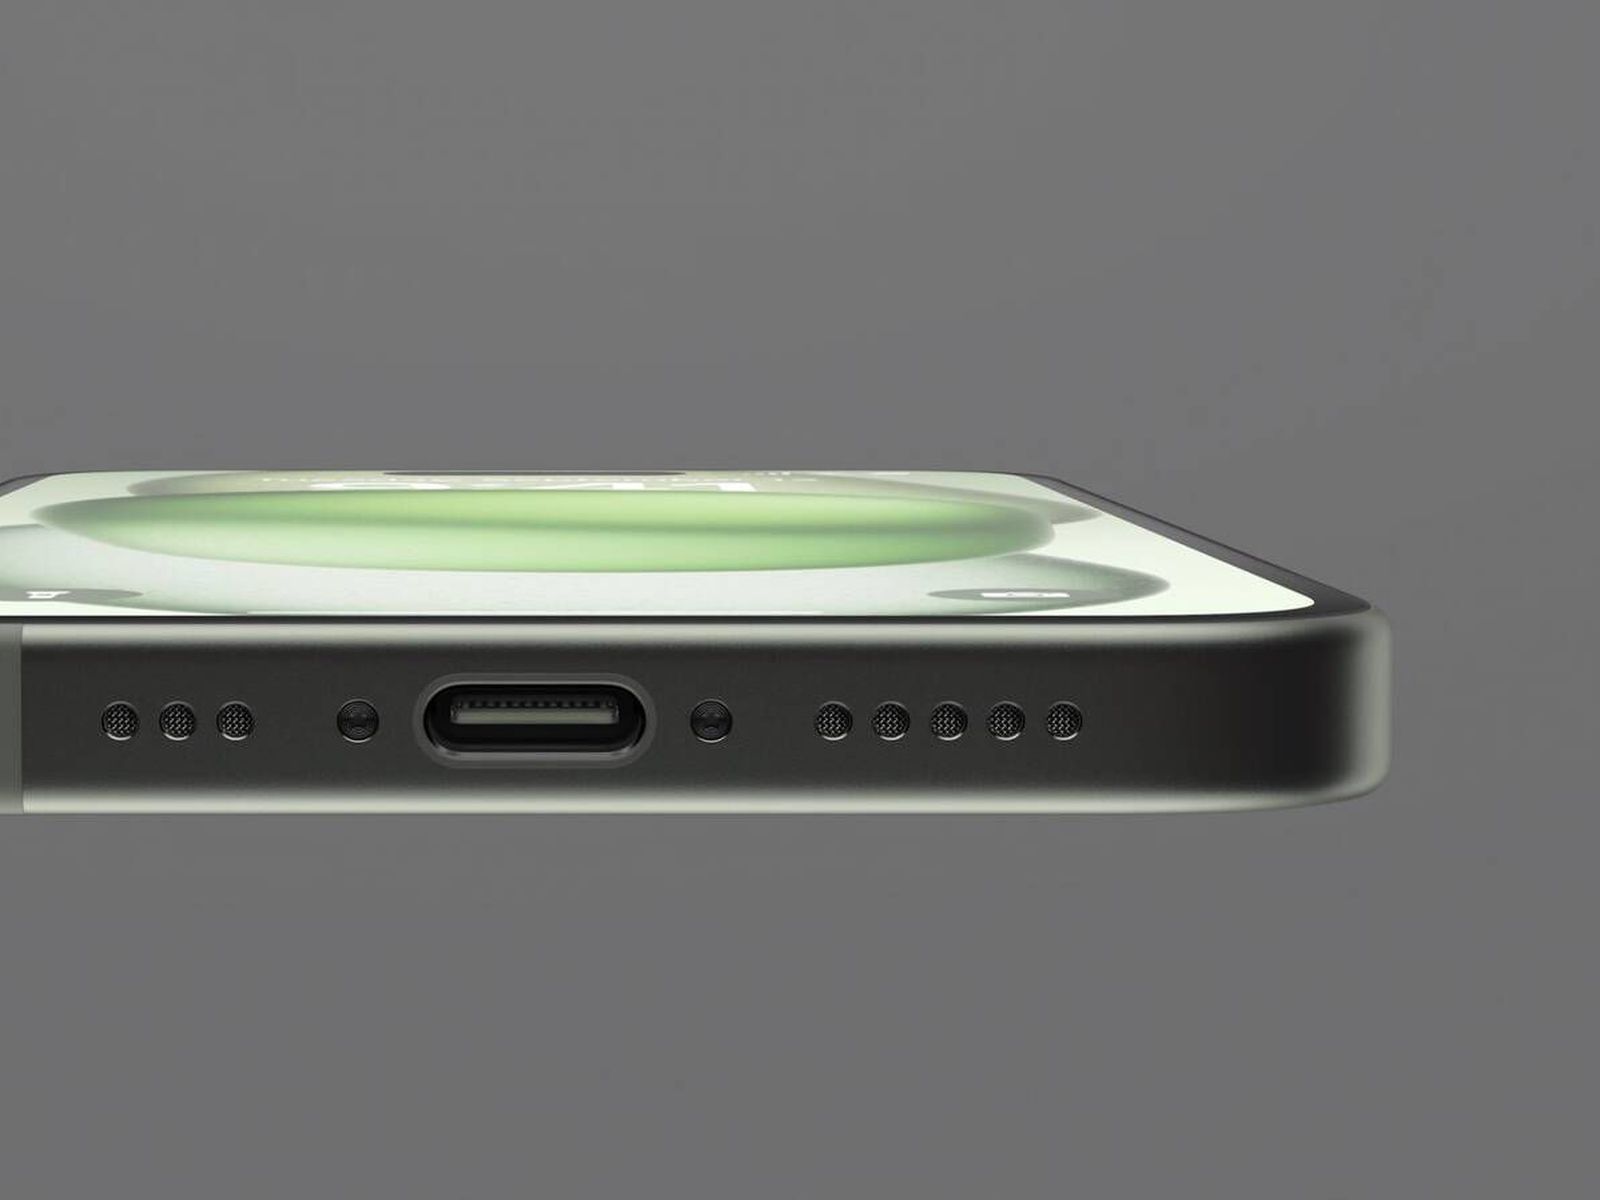 Is iPhone 13 USB-C or Lightning? - GameRevolution